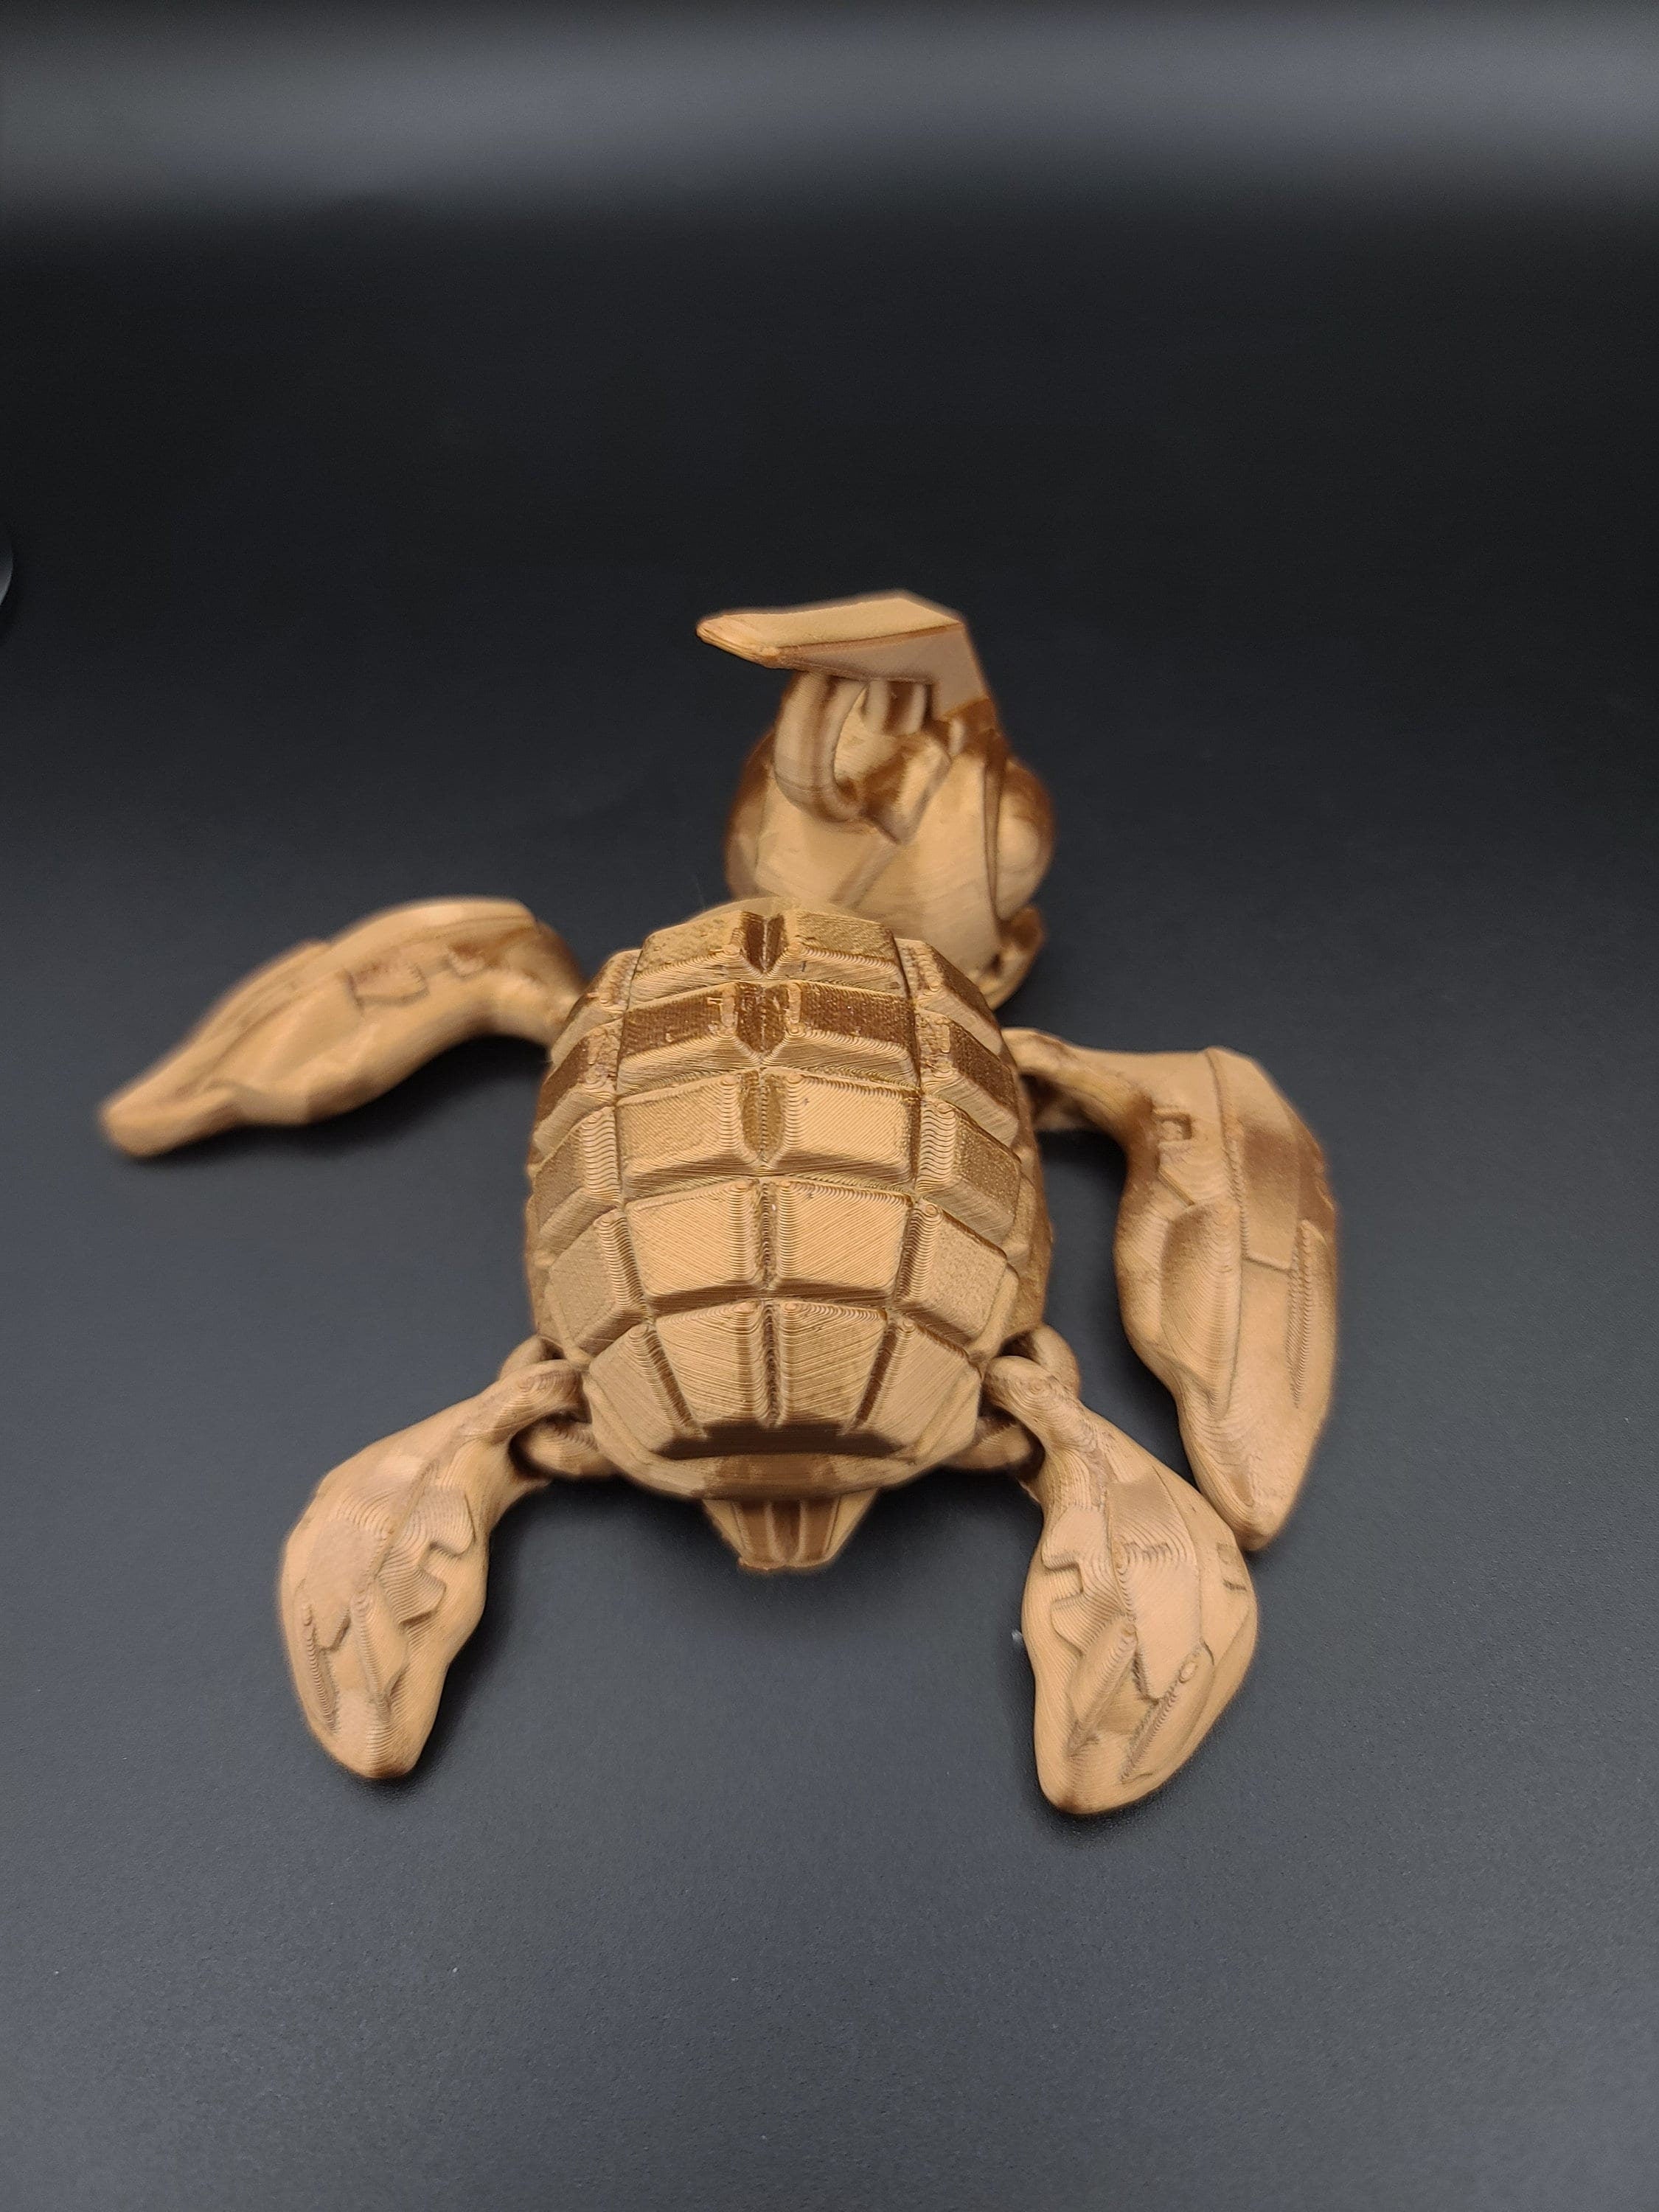 Turtle- Grenurtle | Grenade / Turtle 3D Printed (MADE) | Copper Color | Adult Fidget Toy | Sensory Turtle Buddy.